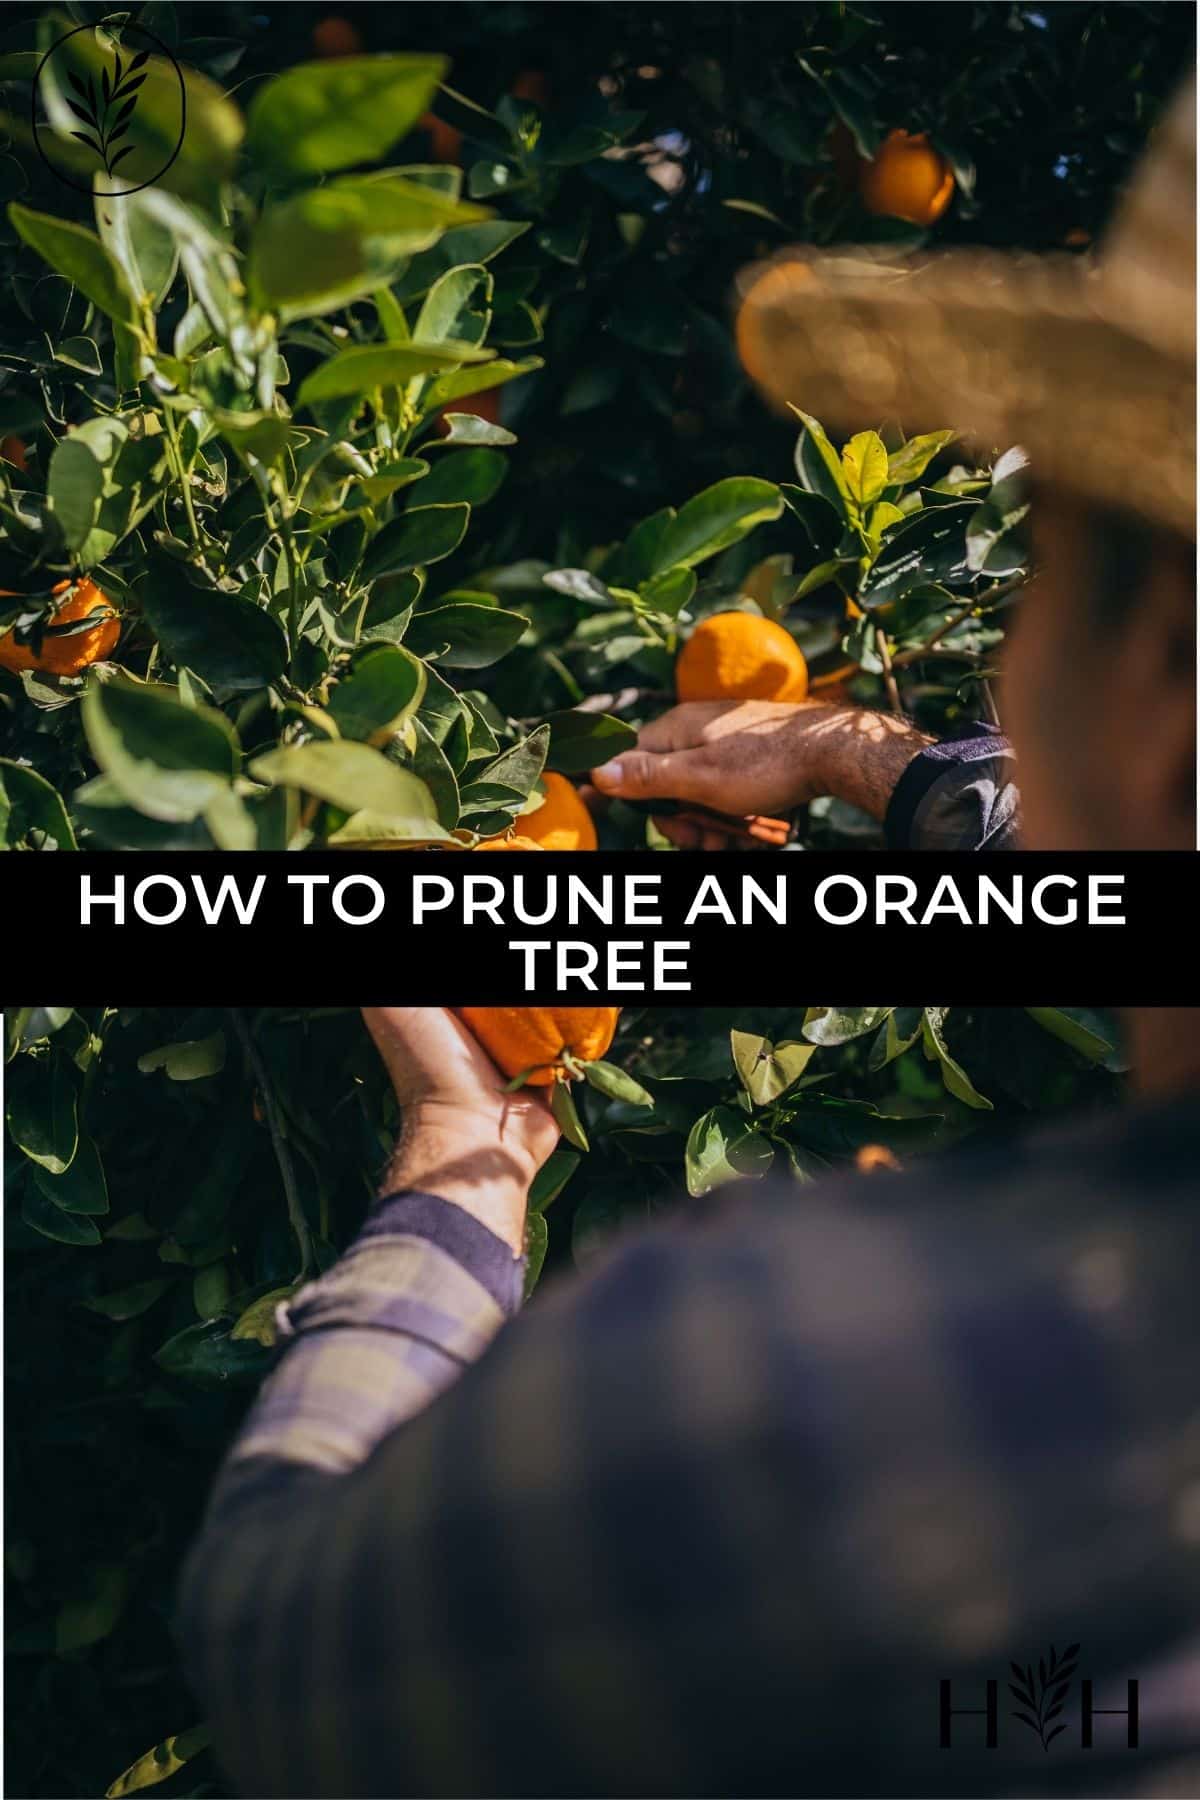 How to prune an orange tree via @home4theharvest